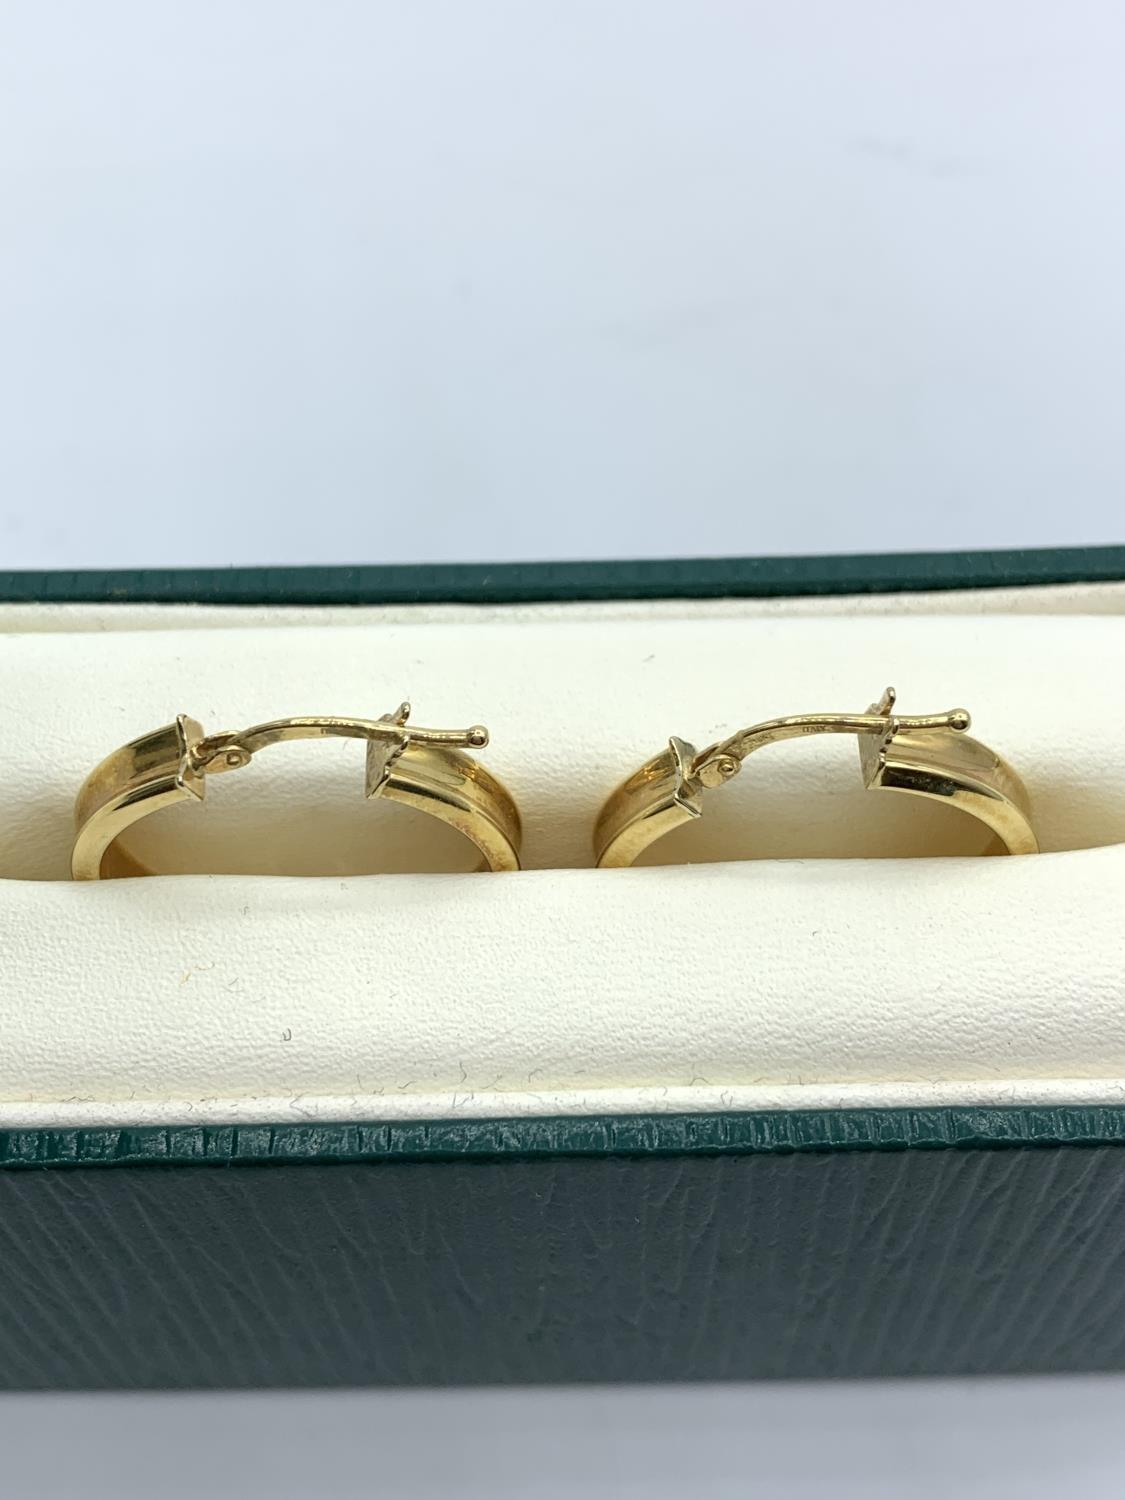 Pair of 18K Yellow Gold Hoop Earrings in original presentation box, weight 2.2g and 2cm diameter - Image 9 of 10